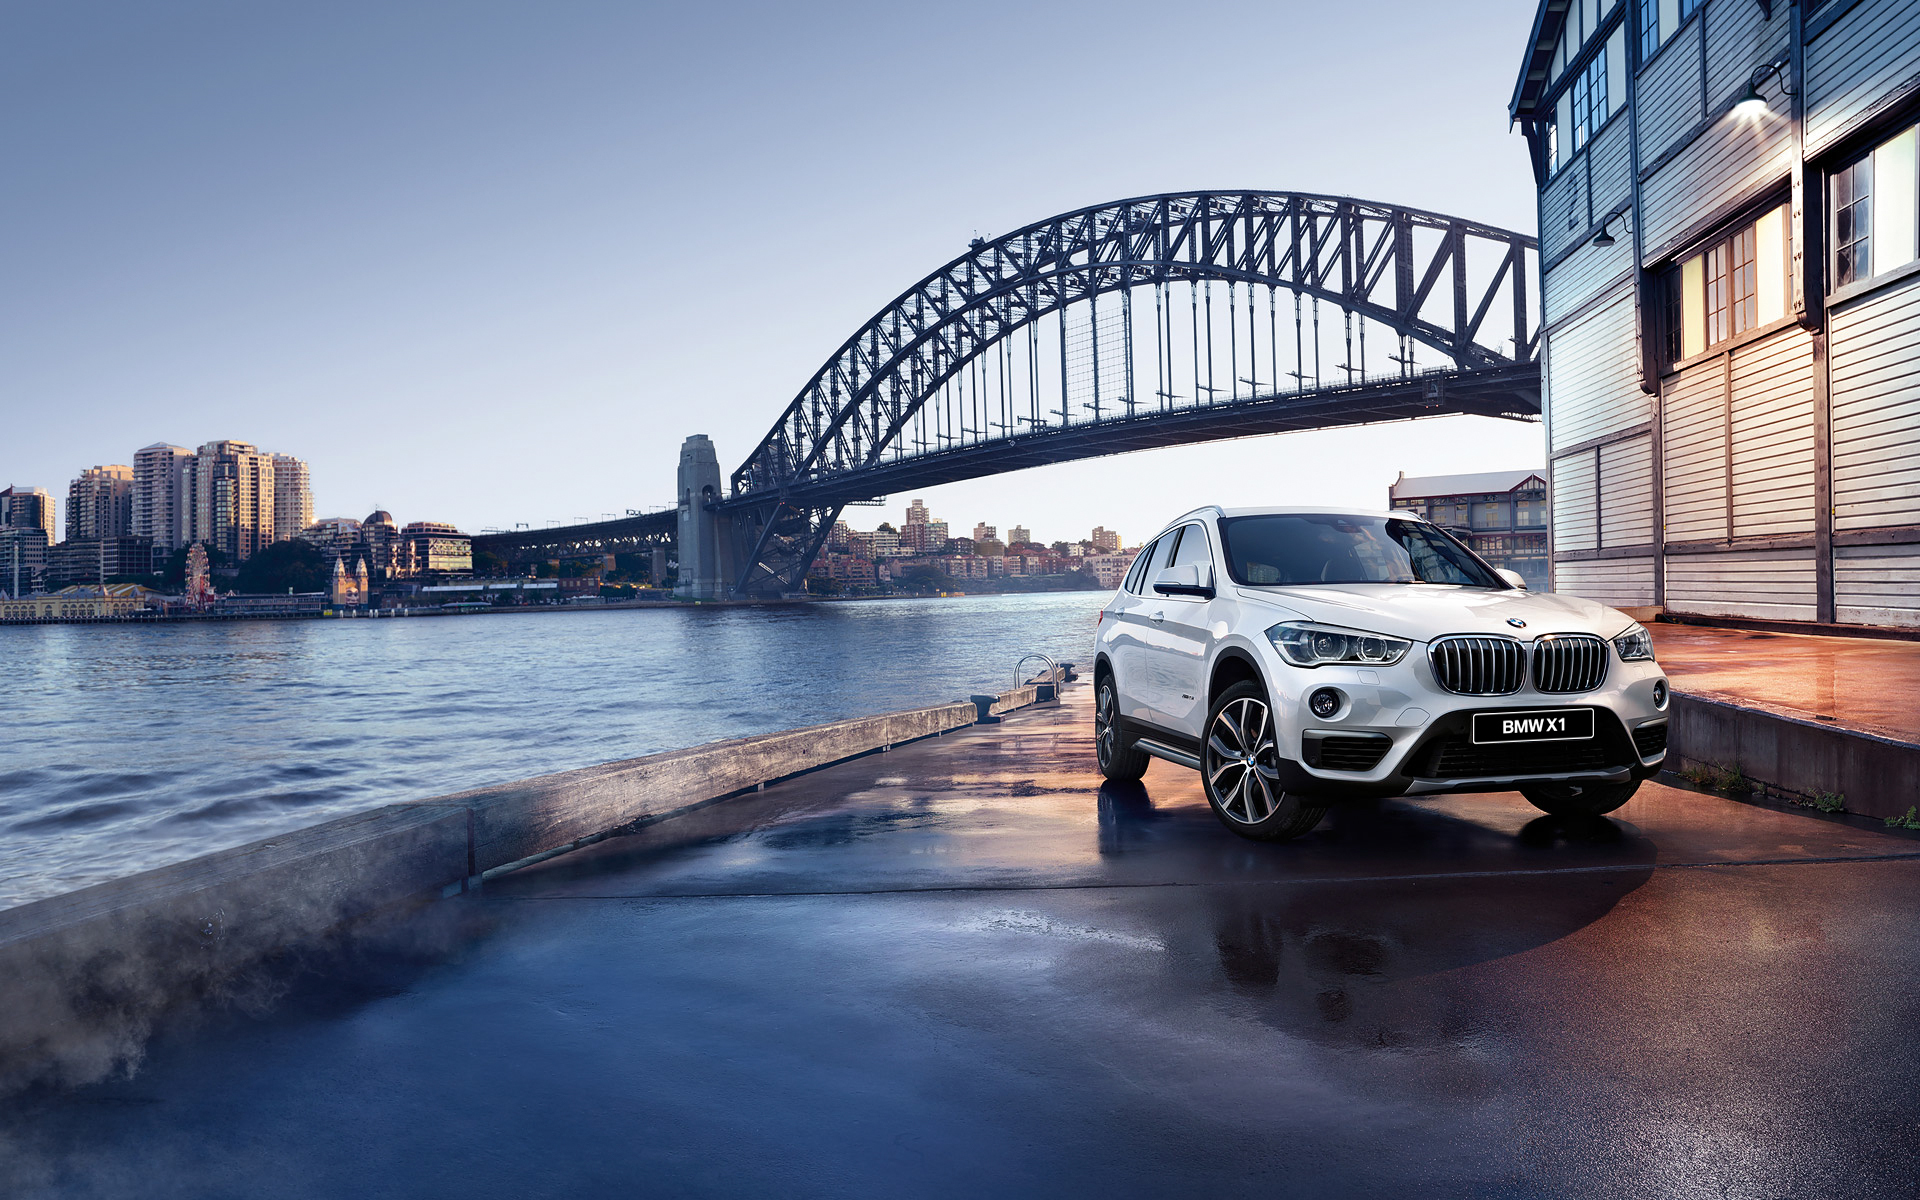 BMW X1 BMW White Car Luxury Car SUV Car Vehicle Sydney Harbour Bridge City Australia 1920x1200